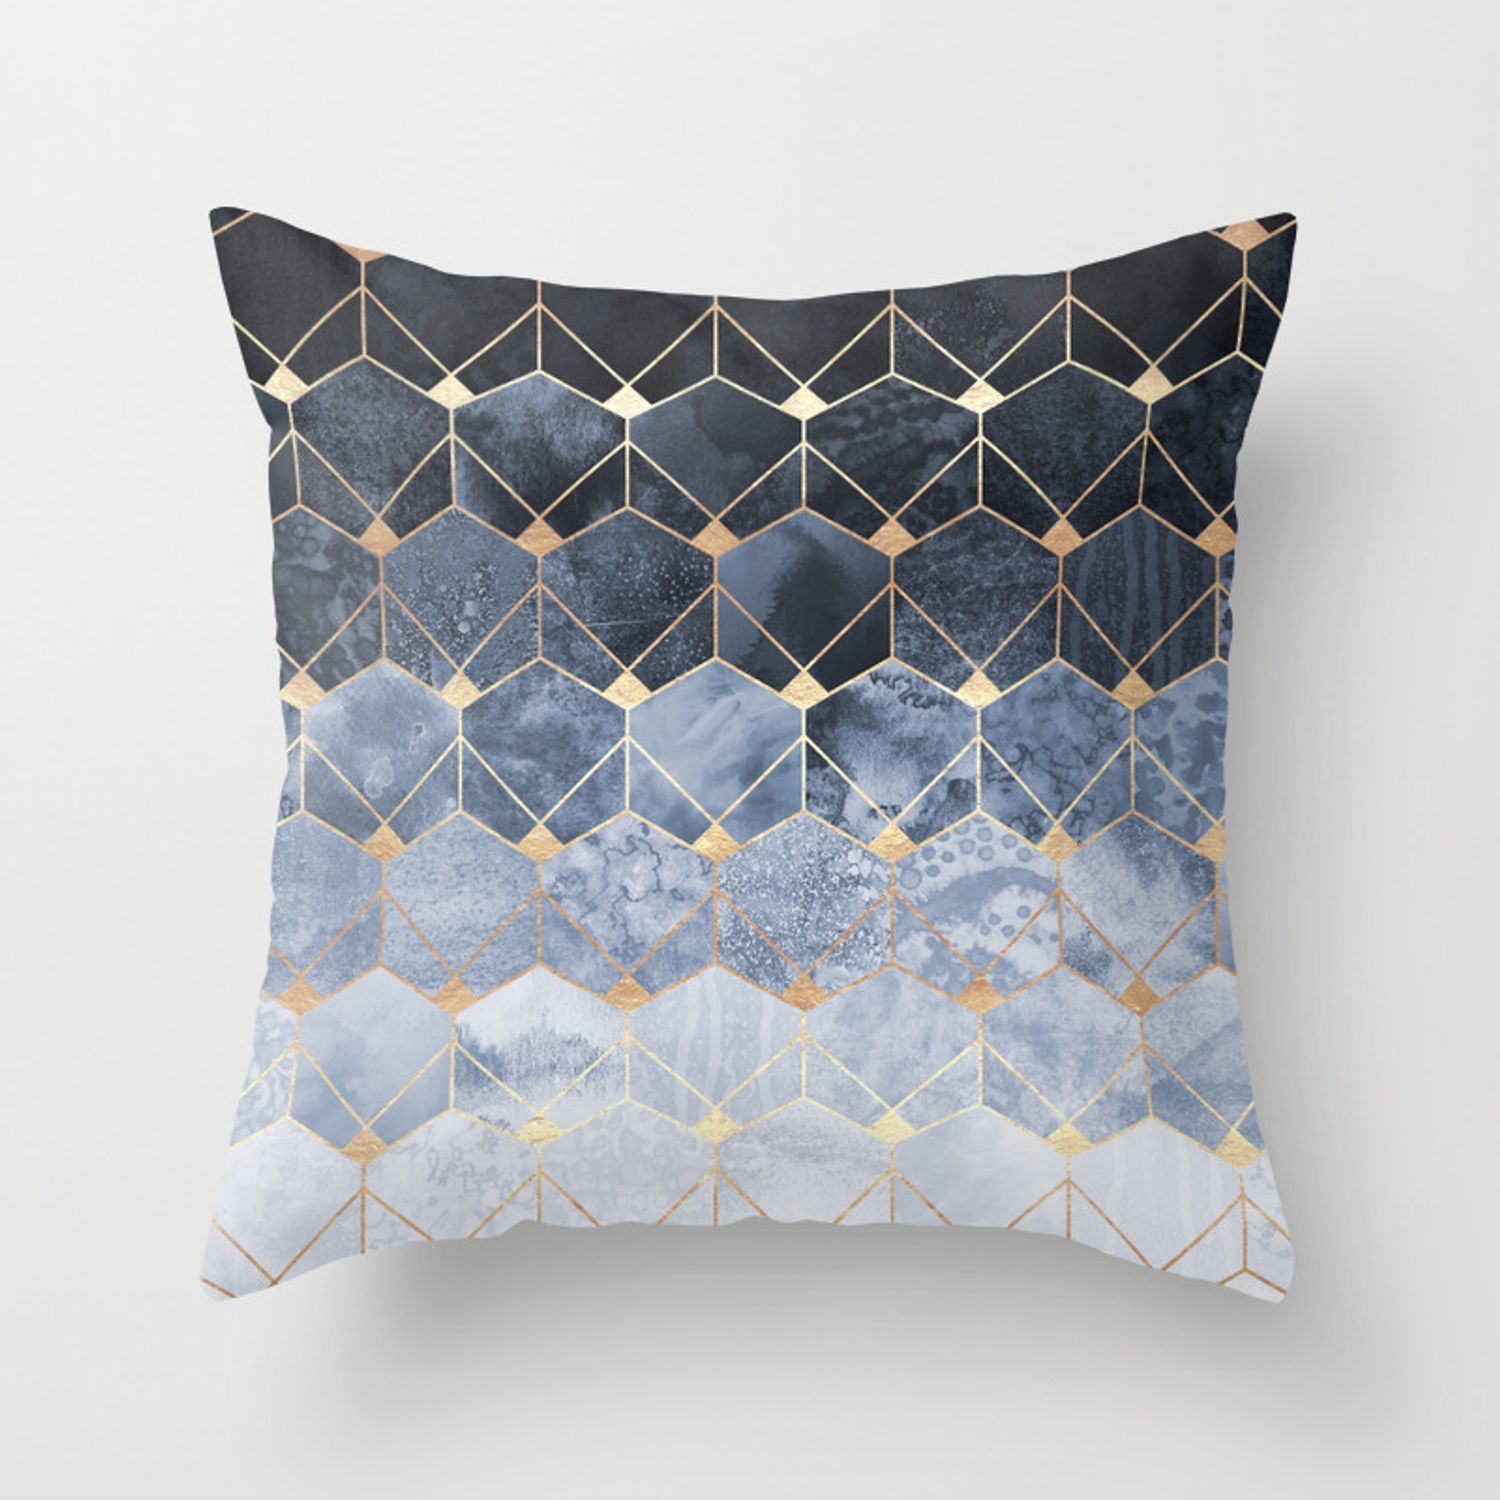 Blue Hexagons And Diamonds Throw Pillow Intended For Blue Hexagons And Diamonds Credenzas (View 18 of 30)